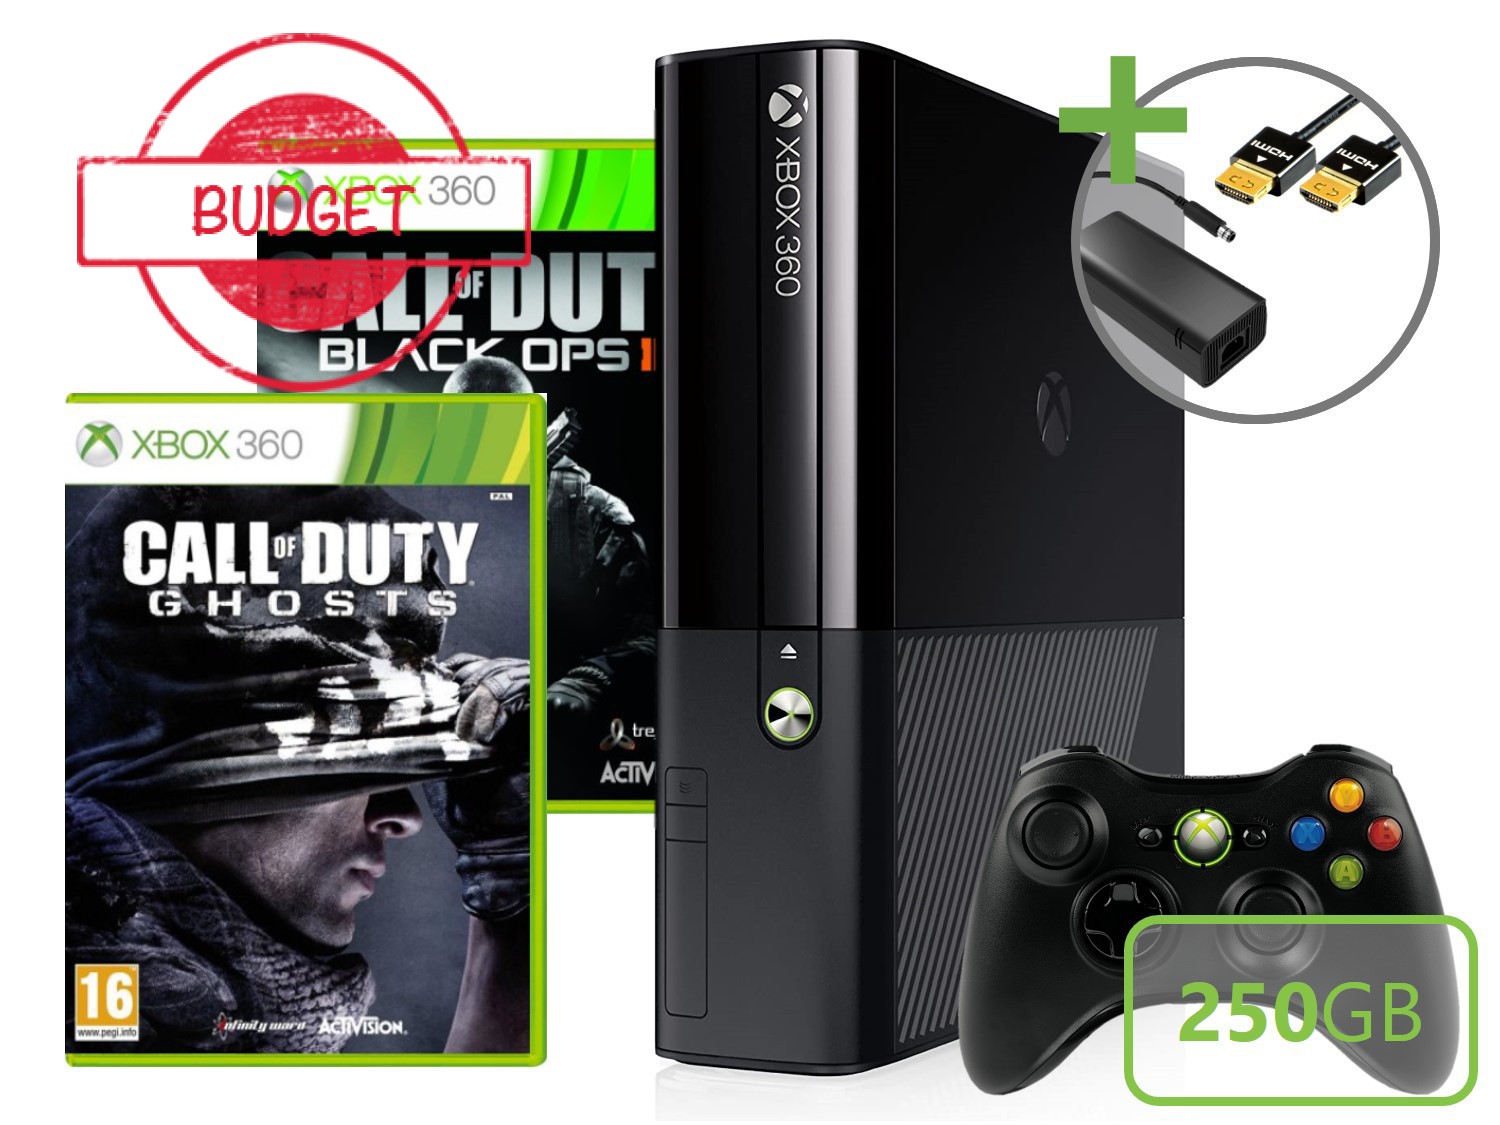 Microsoft Xbox 360 New Slim Starter Pack - 250GB Call of Duty Edition - Budget Kopen | Xbox 360 Hardware